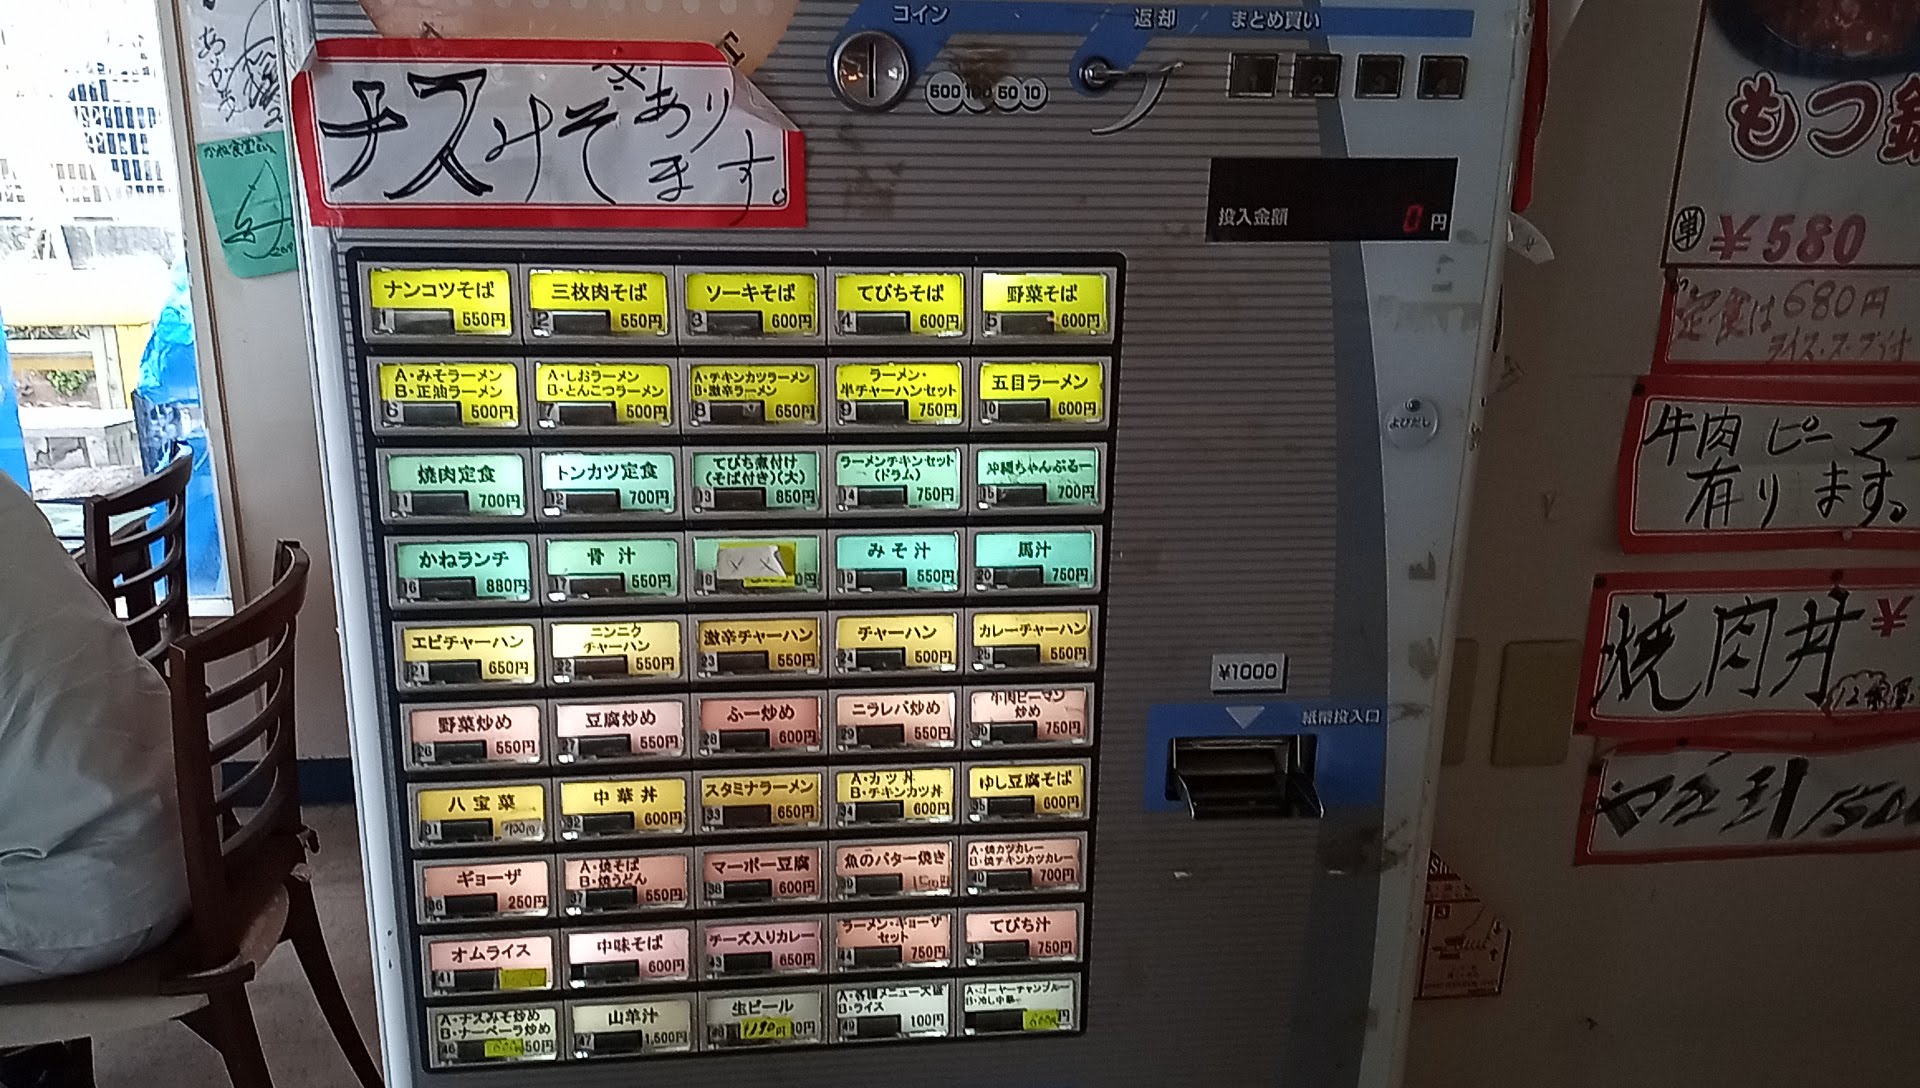 a ticket machine in Kane Shokudou